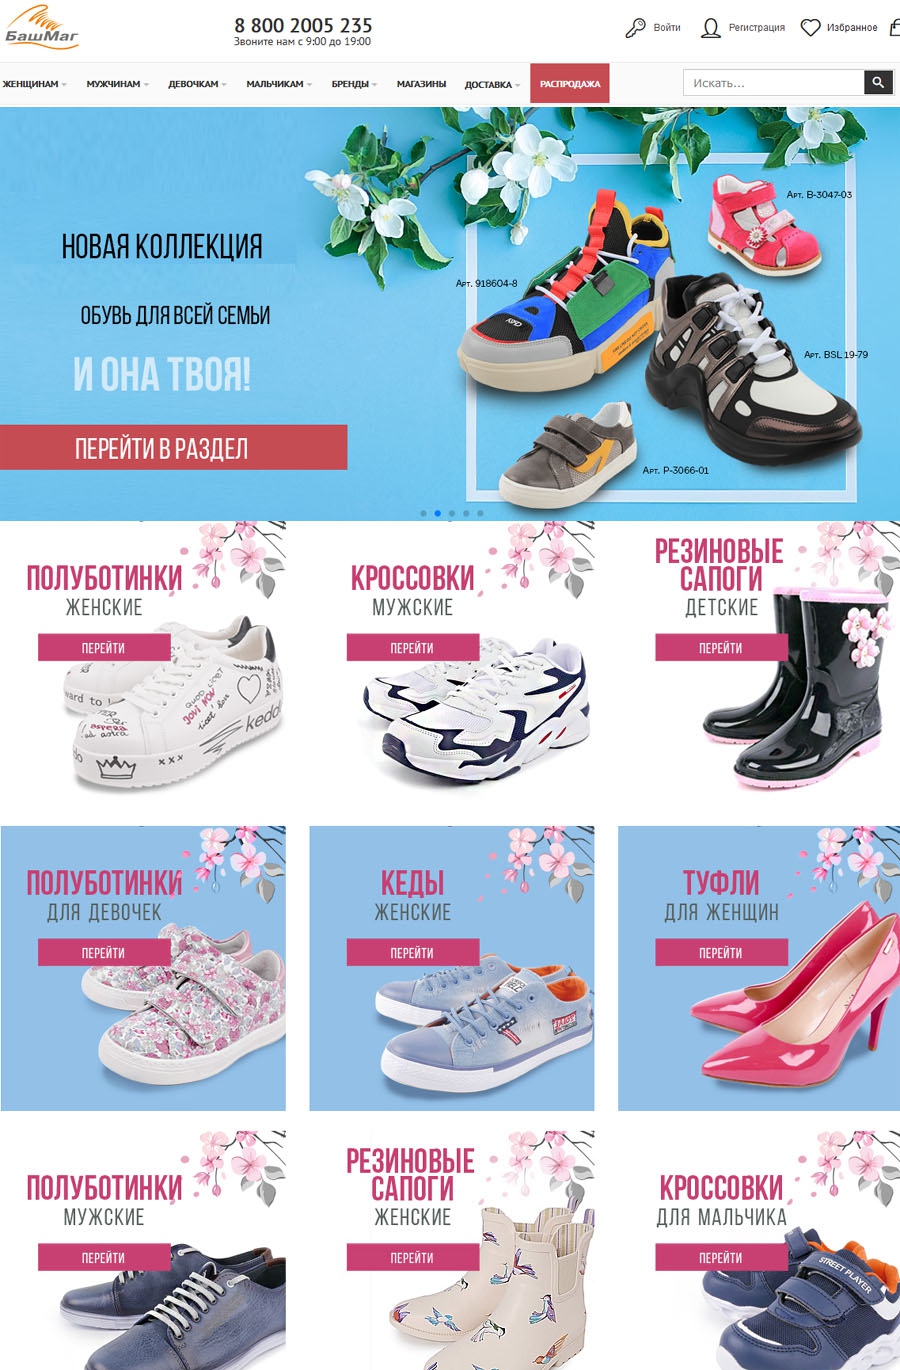 Магазин Обуви Башмаг Официальный Сайт